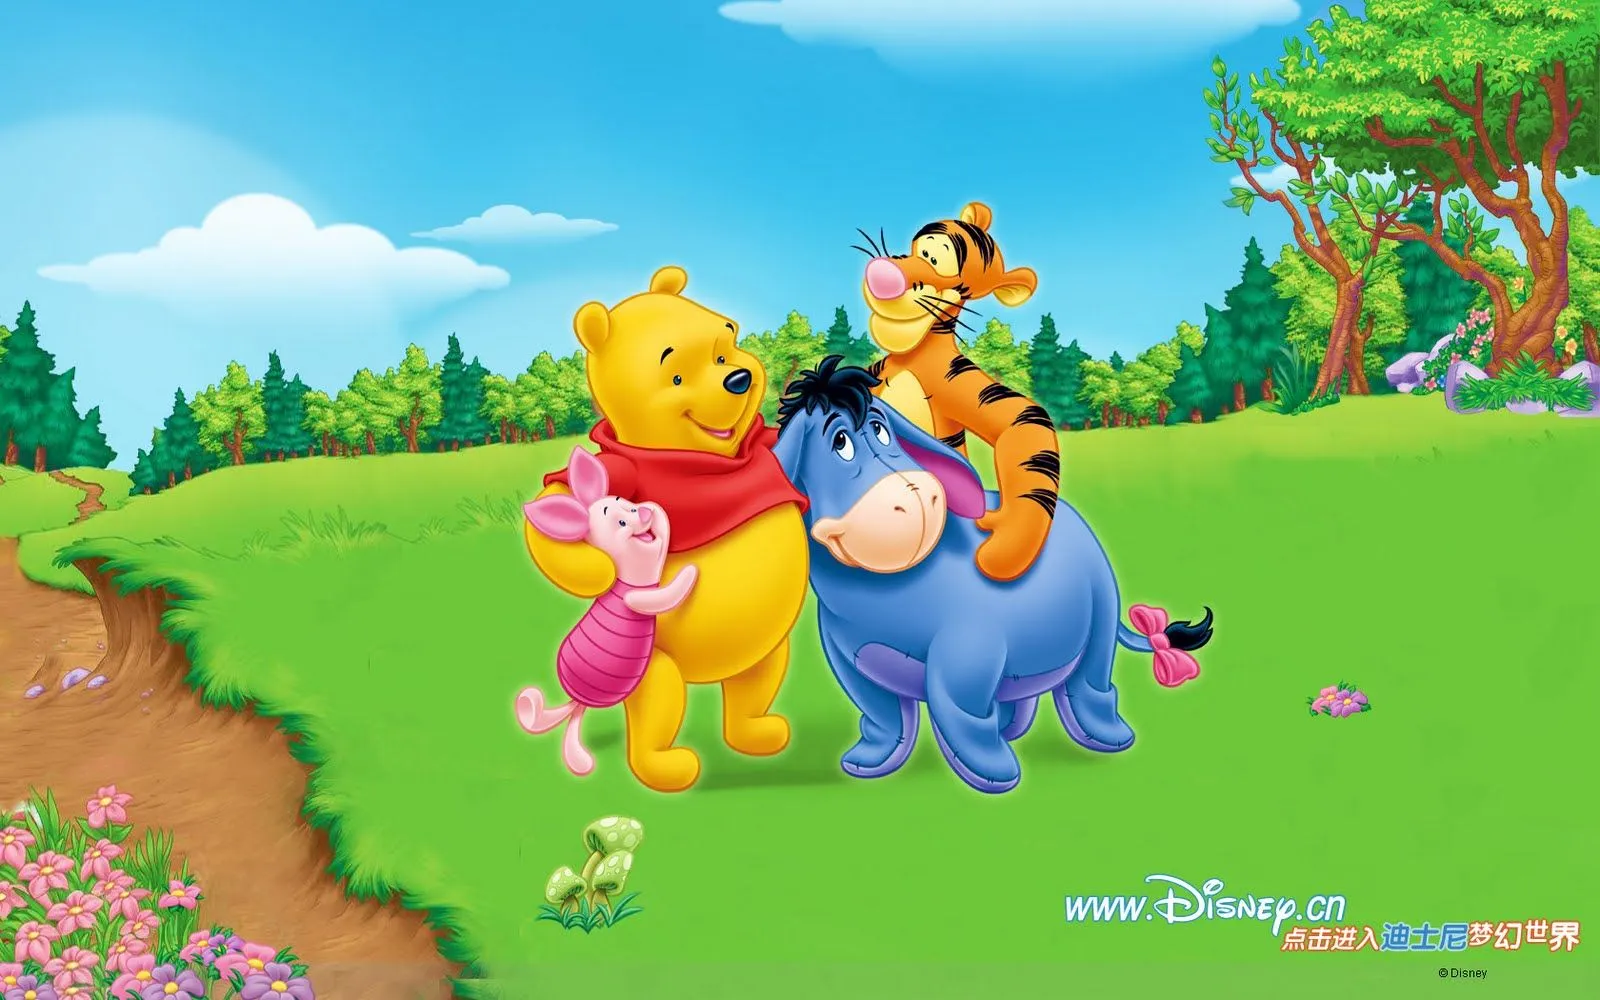 Wallpapers de Winnie Pooh by Disney I (8 imágenes) 